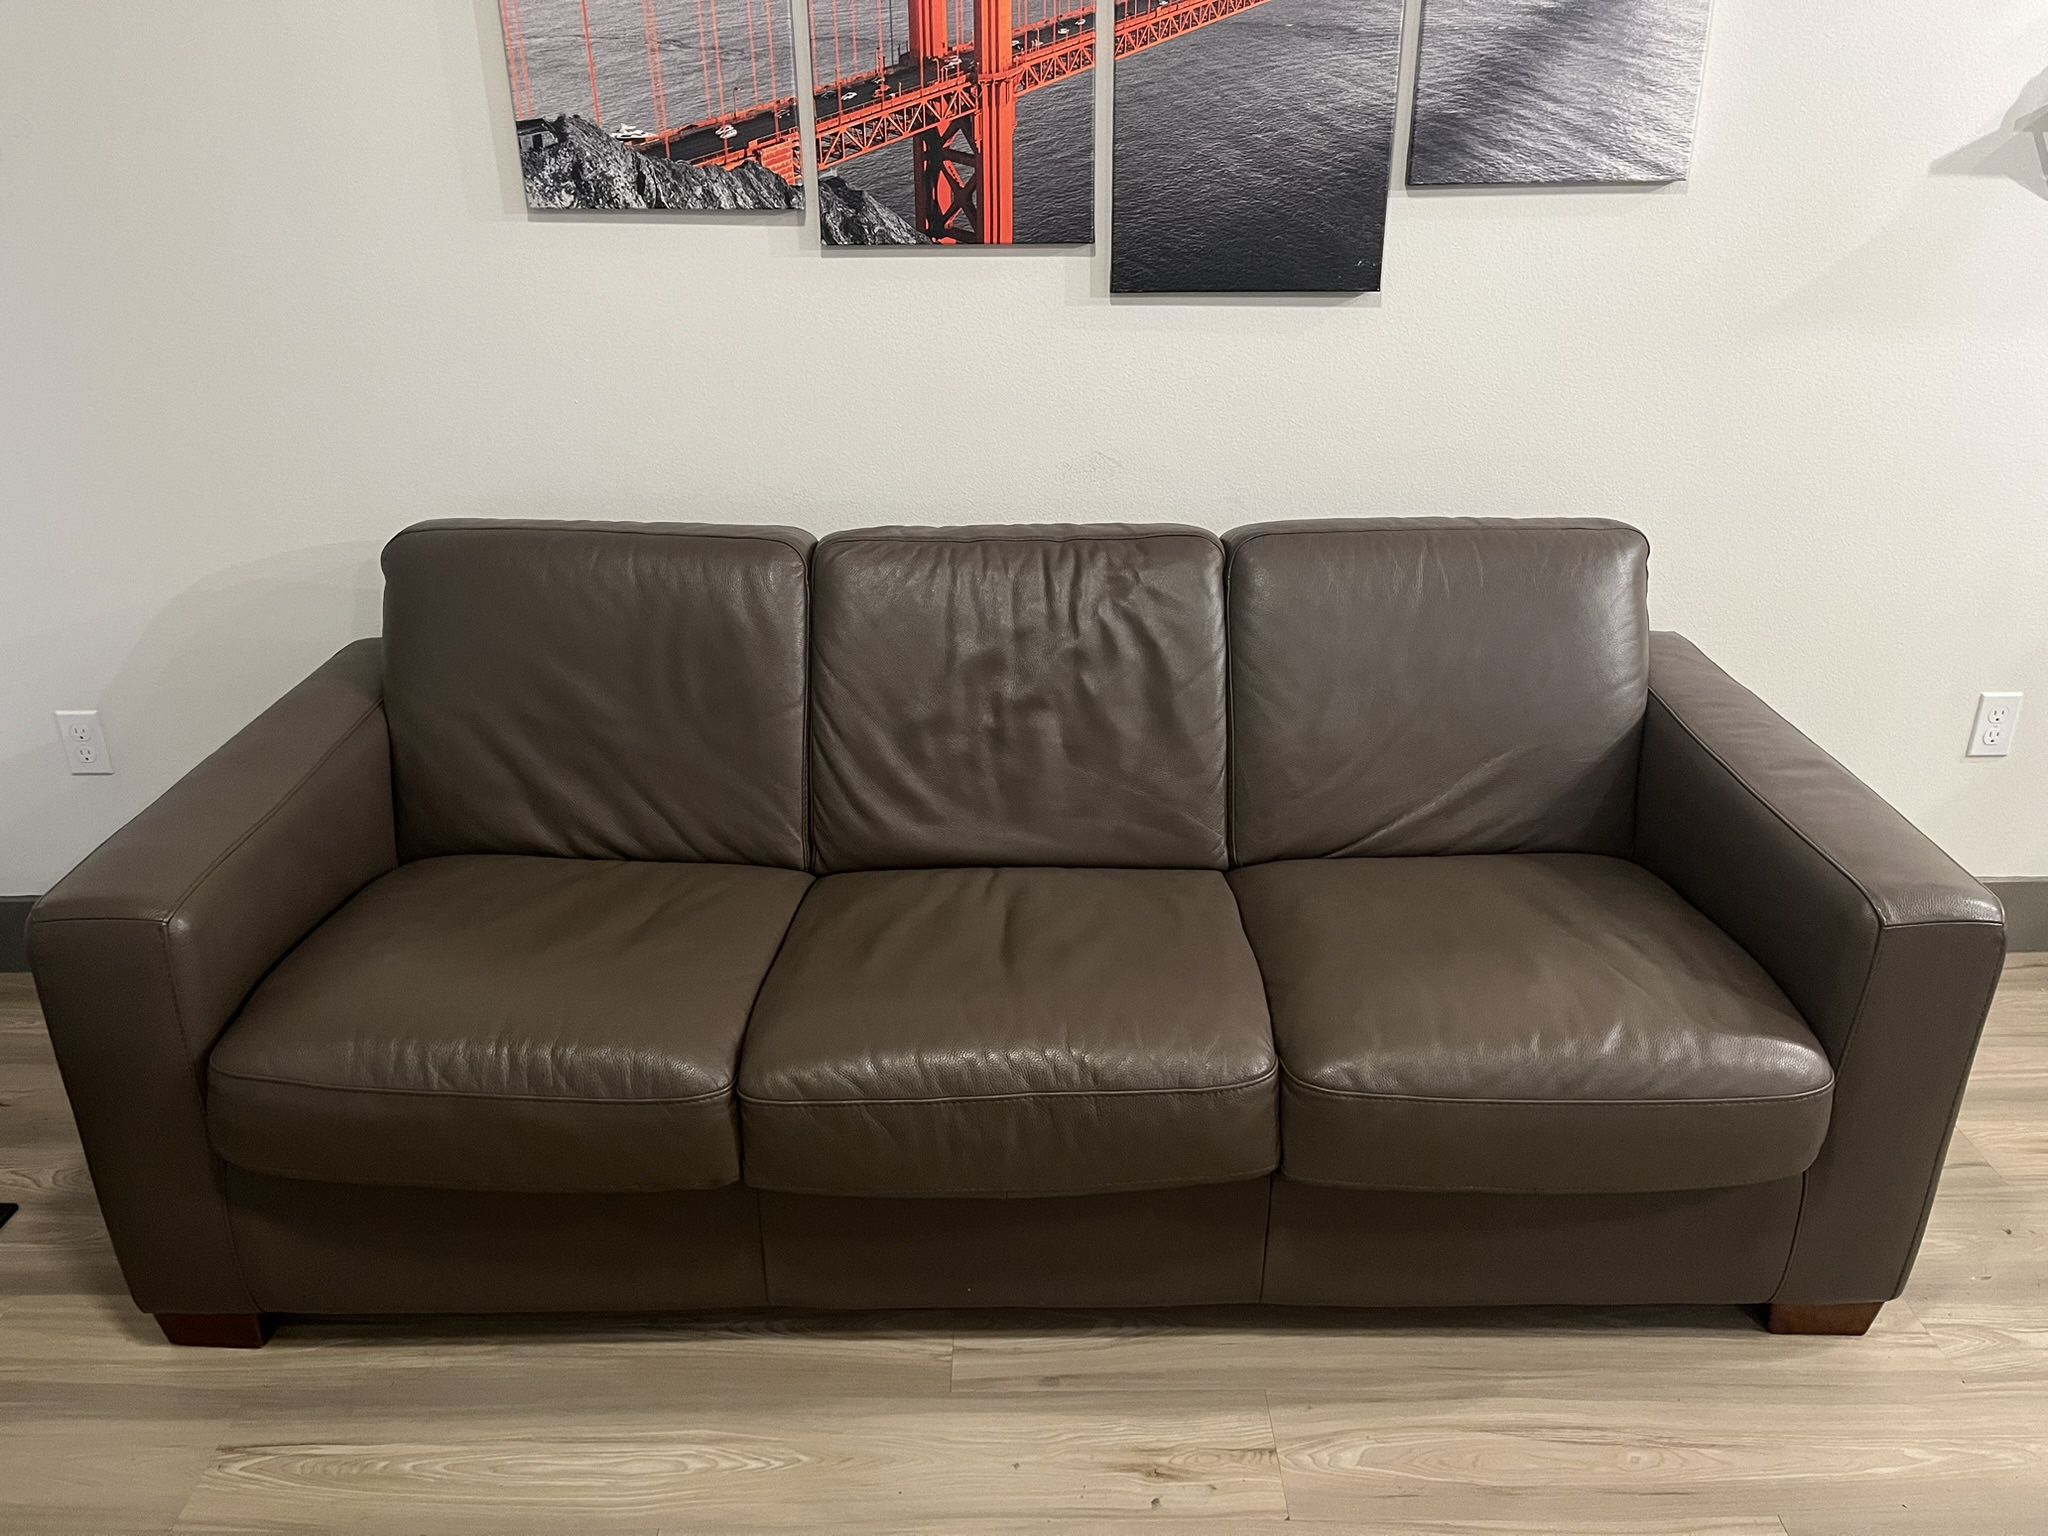 Natuzzi Editions Brown Leather Sleeper Sofa